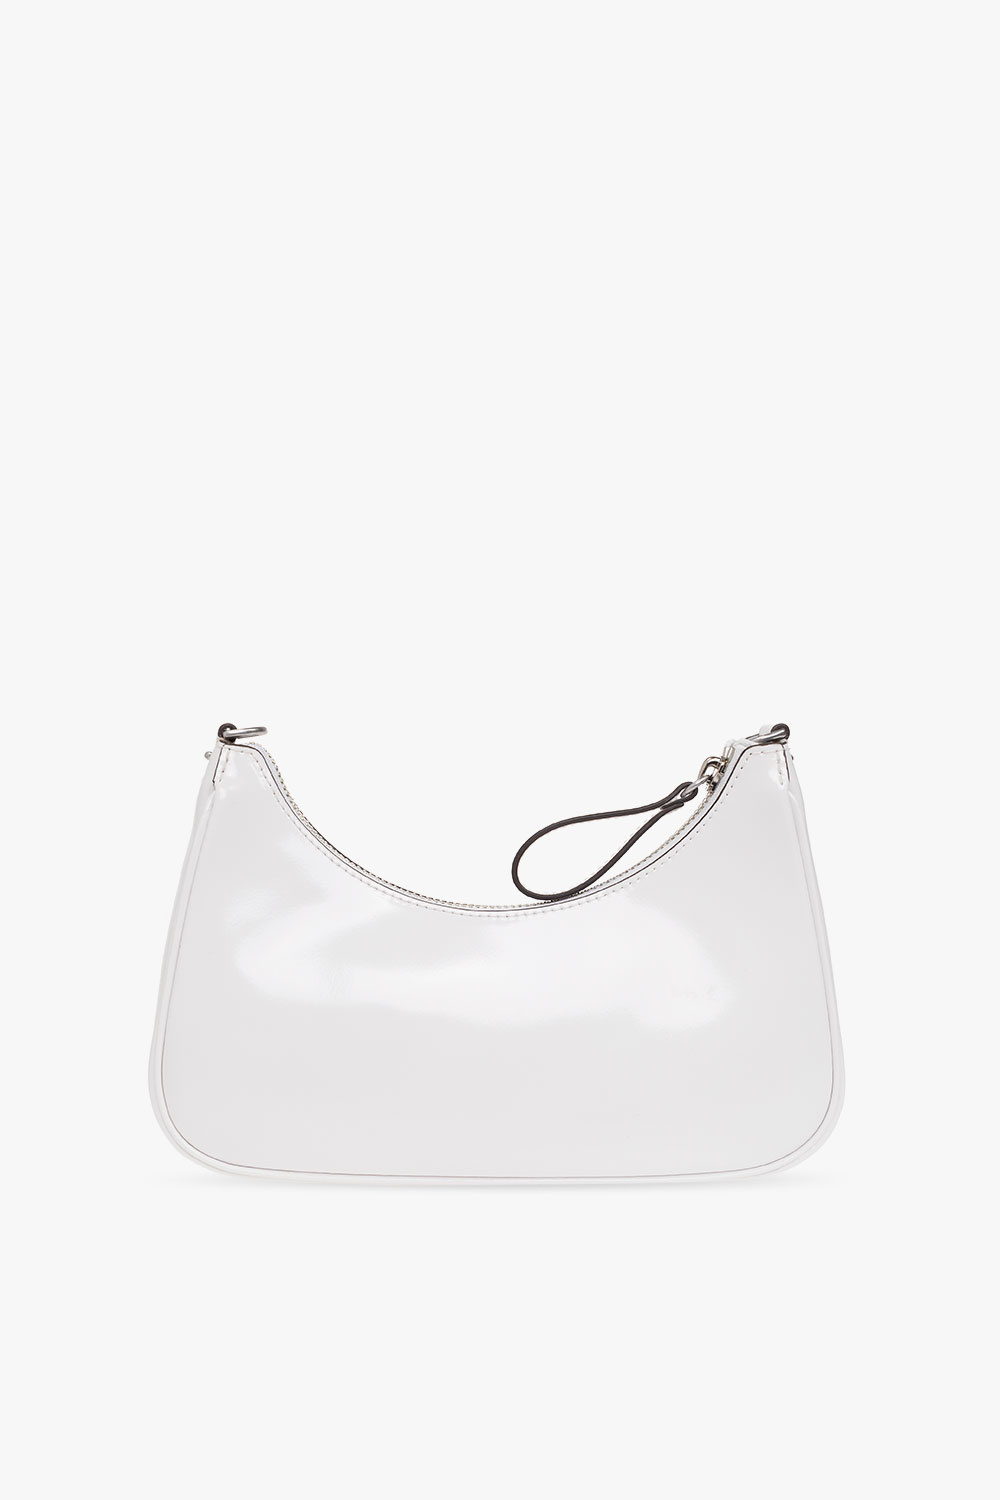 Tory Burch 'Mercer Small' shoulder bag | Women's Bags | Vitkac